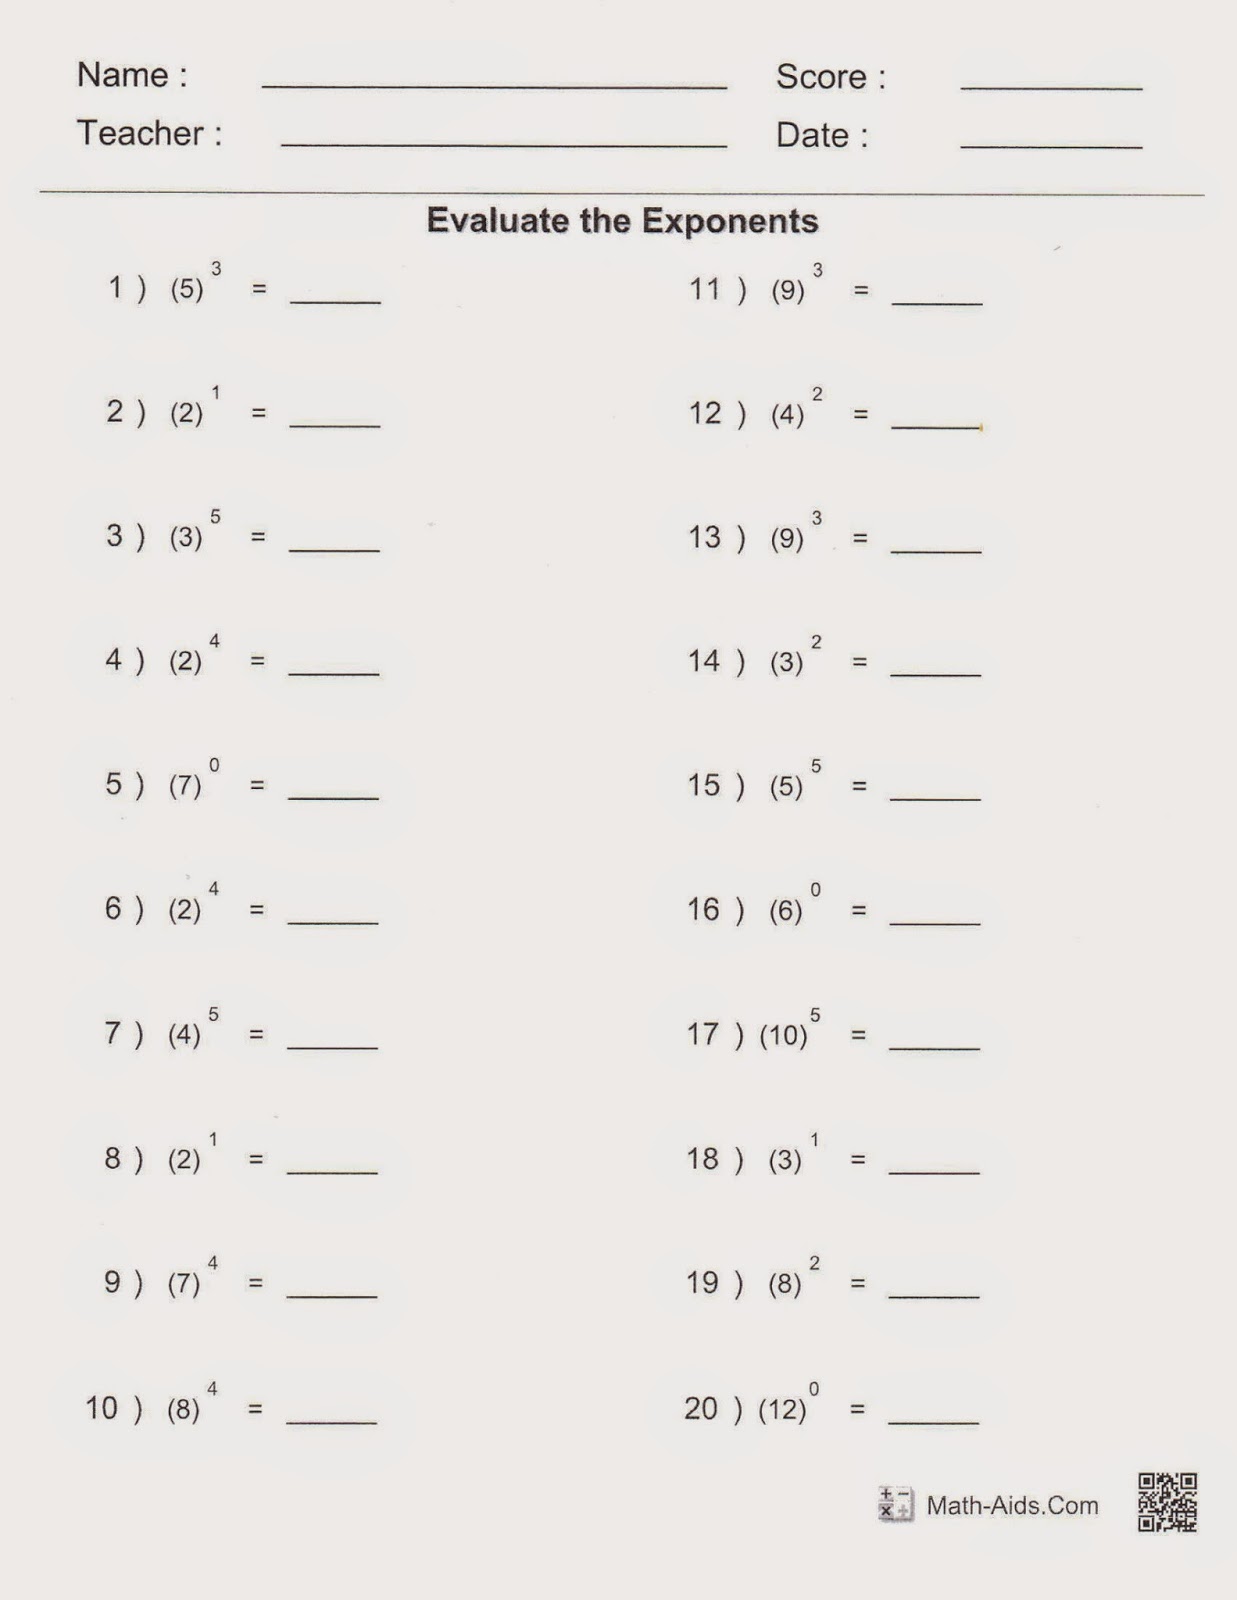 mrs-white-s-6th-grade-math-blog-exponent-practice-10-21-2014